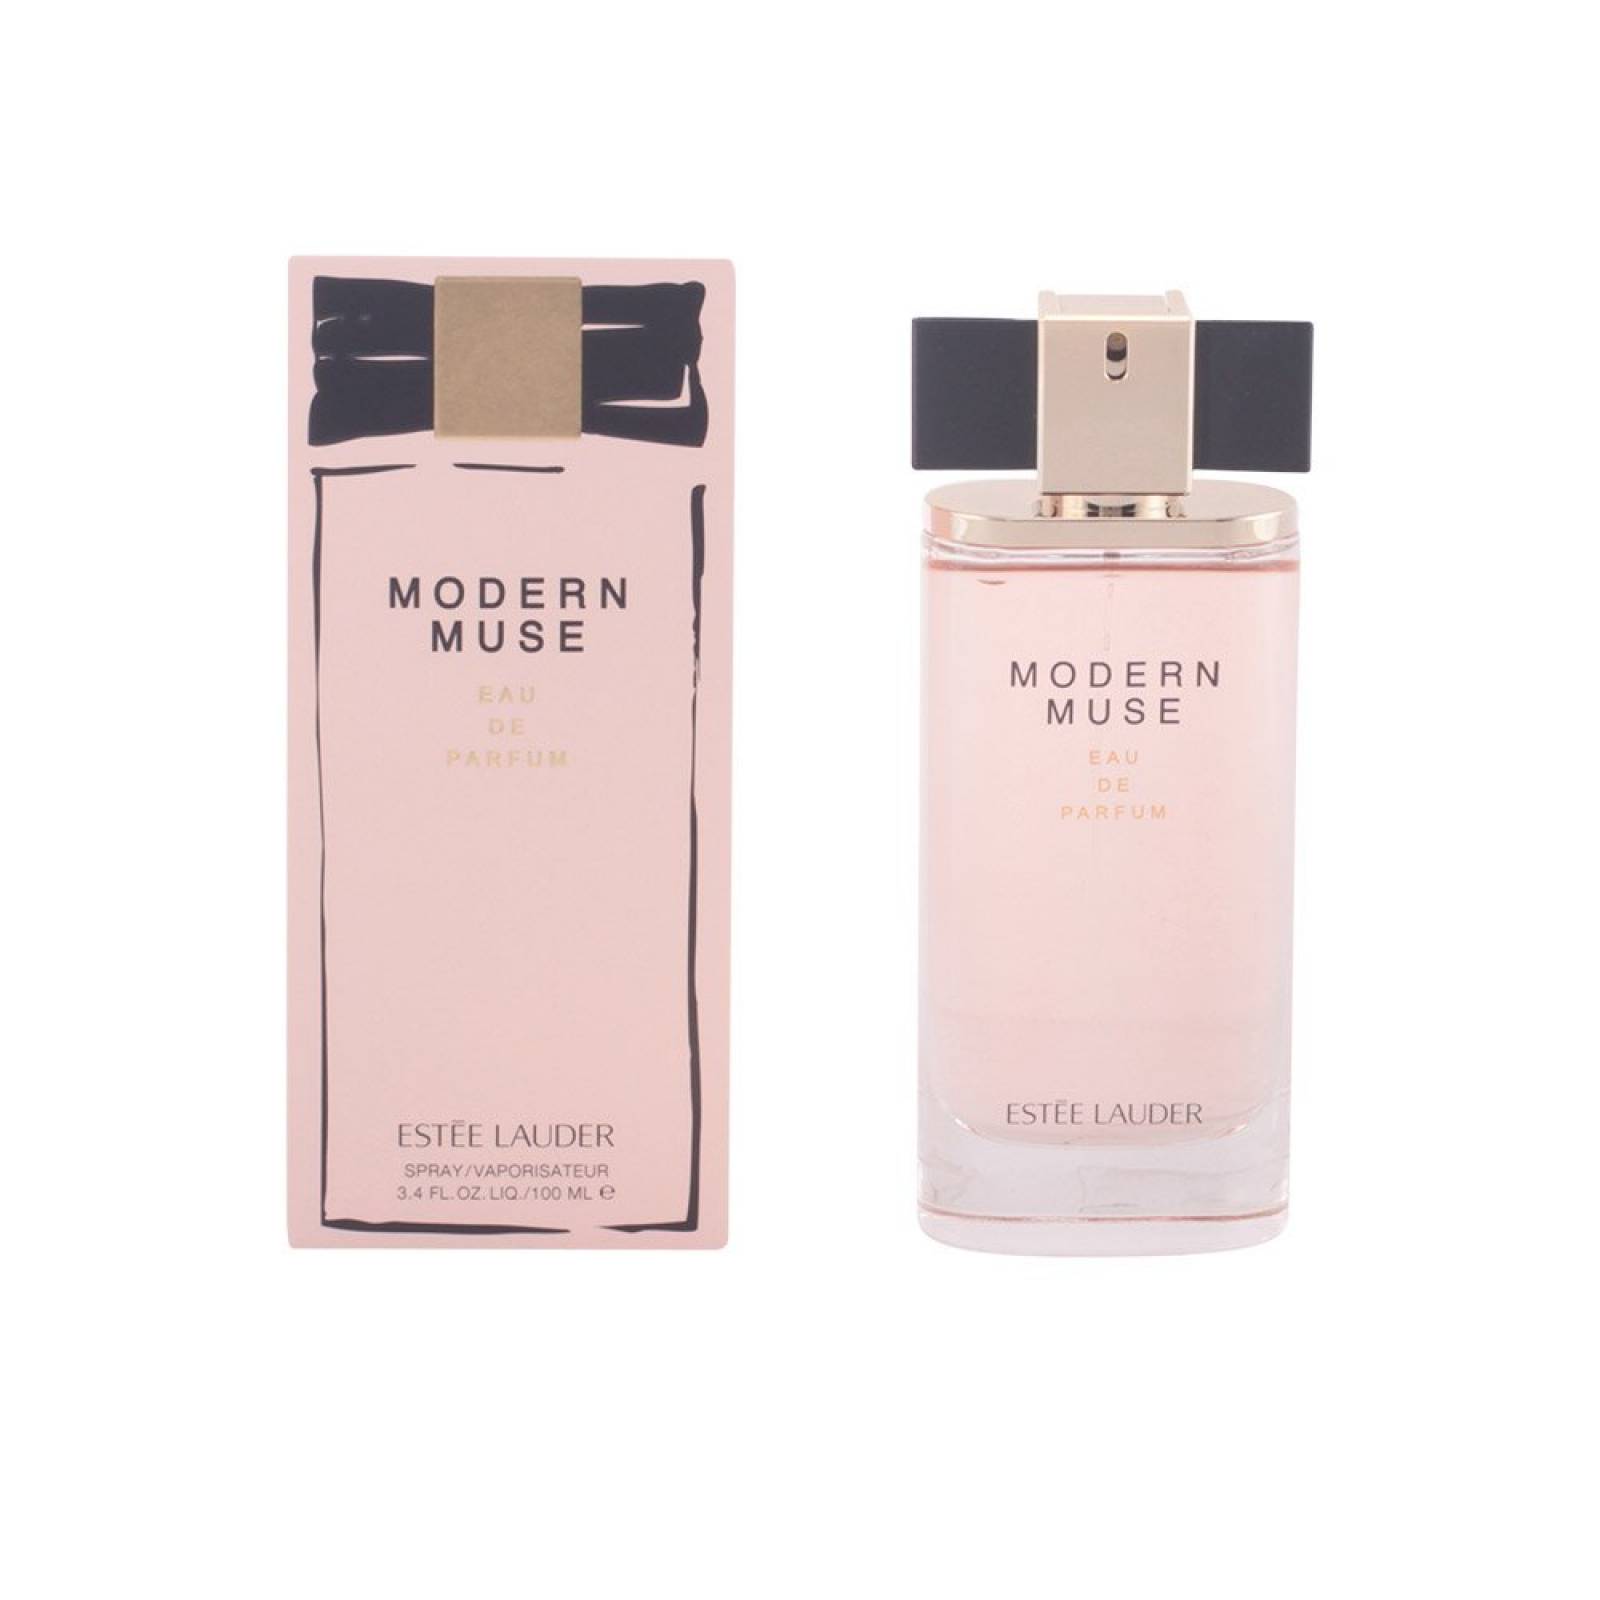 Modern Muse De Estee Lauder Eau de Parfum 100 ml